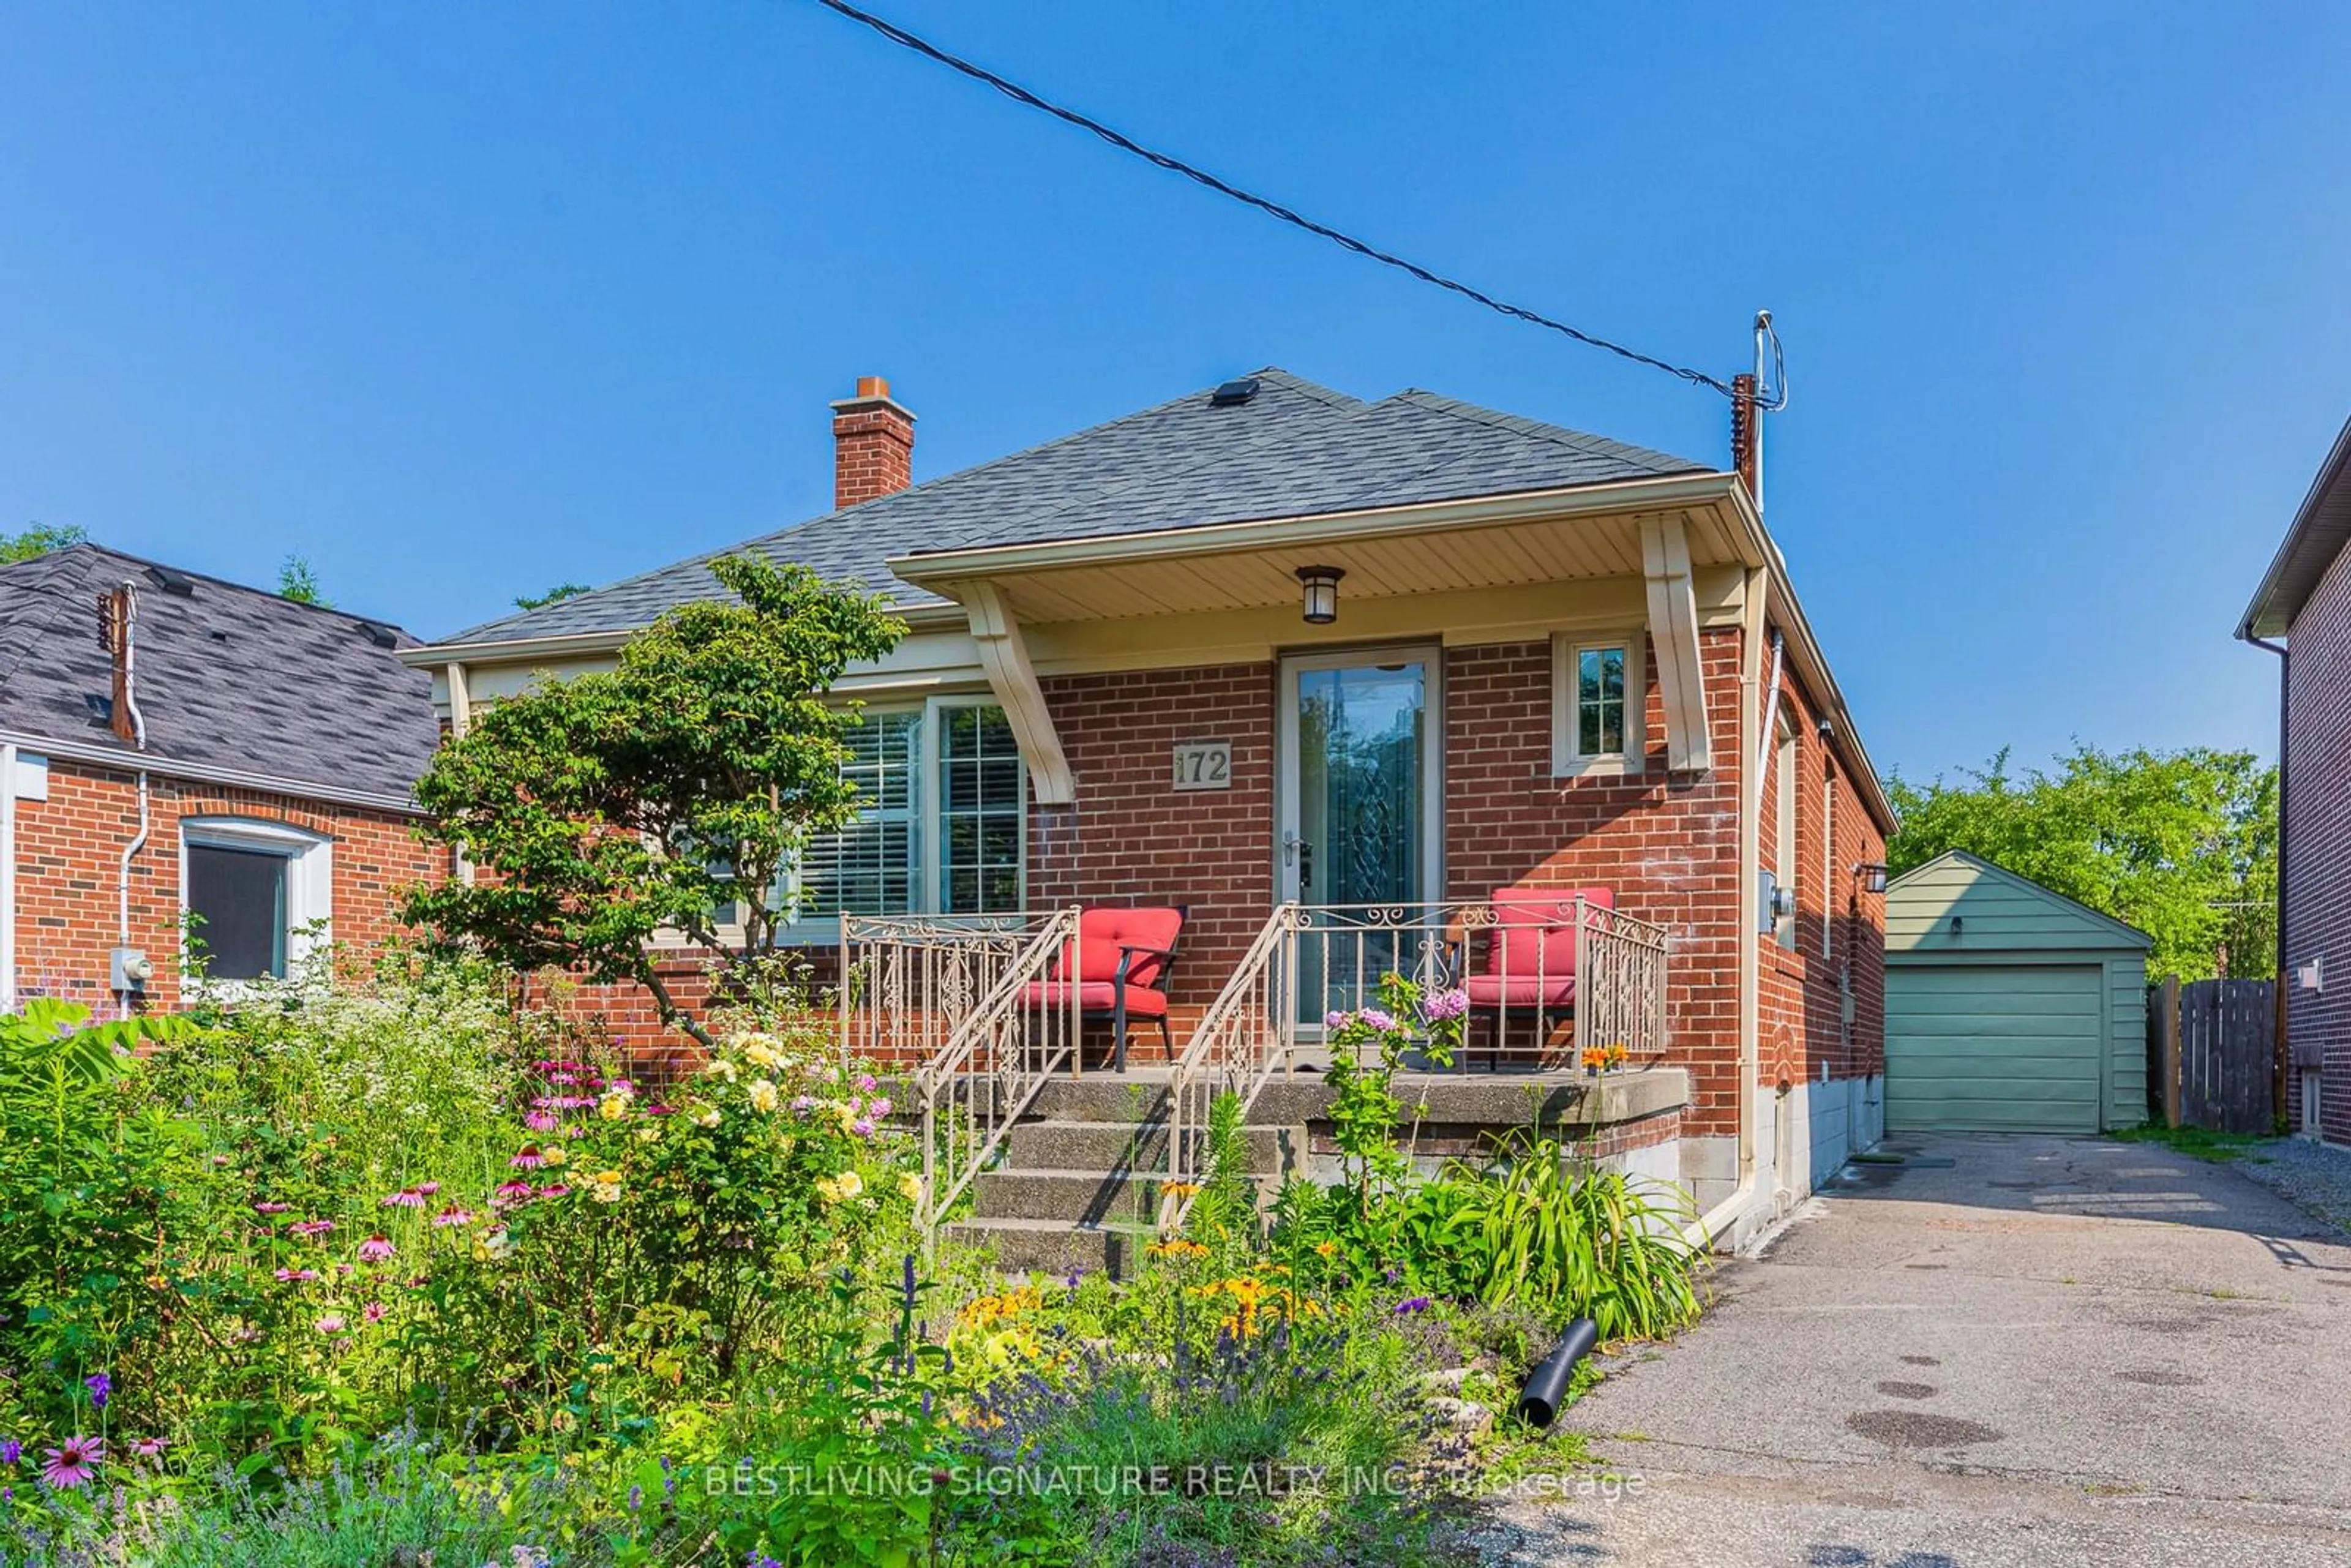 Home with brick exterior material for 172 Park Home Ave, Toronto Ontario M2R 1W9